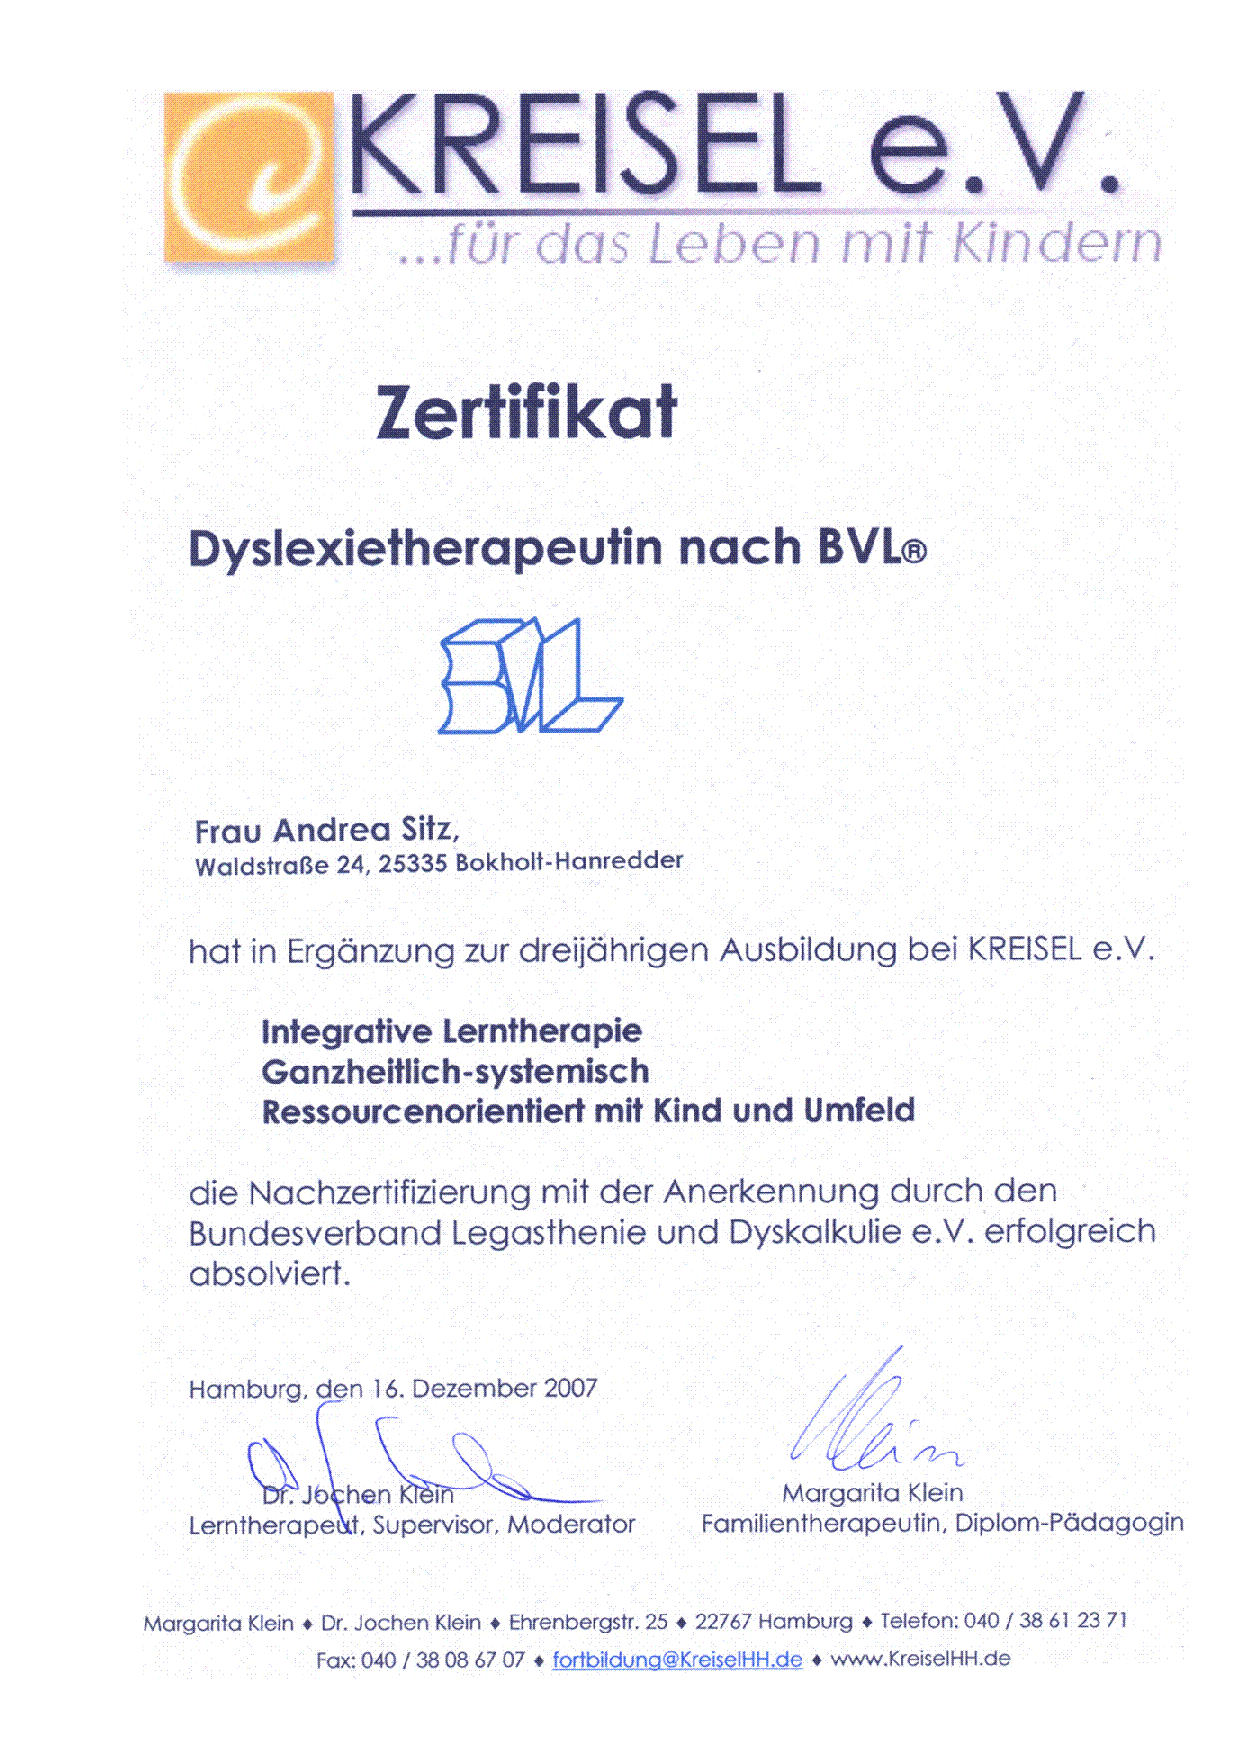 DyslexietherapeutinBVL®-Zertifikat 2007